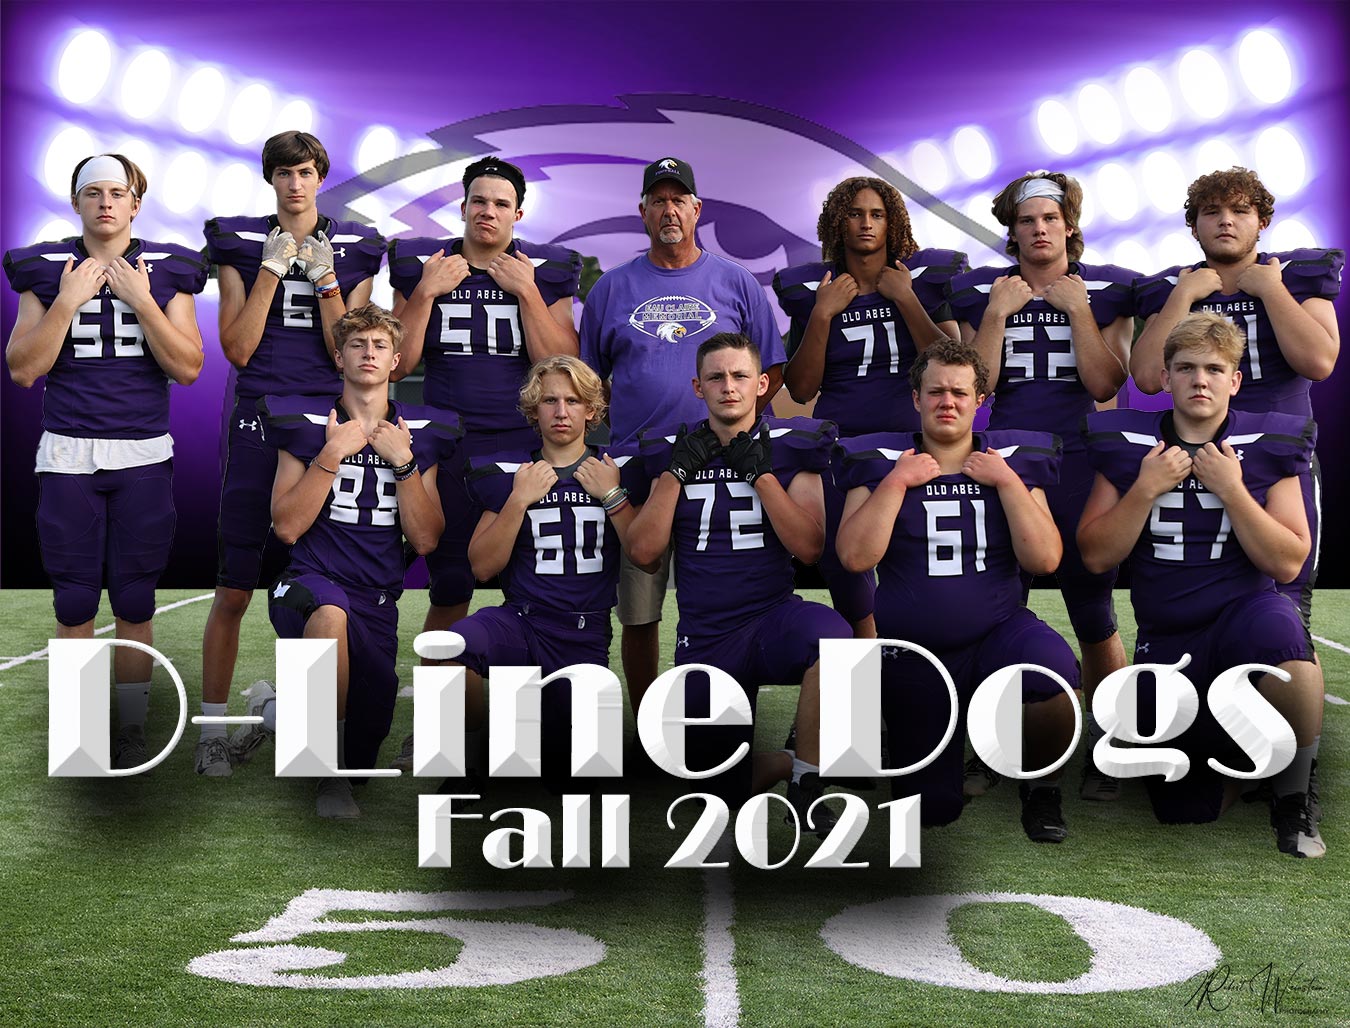 Memorial Football Defense Line players aka D Line Dogs